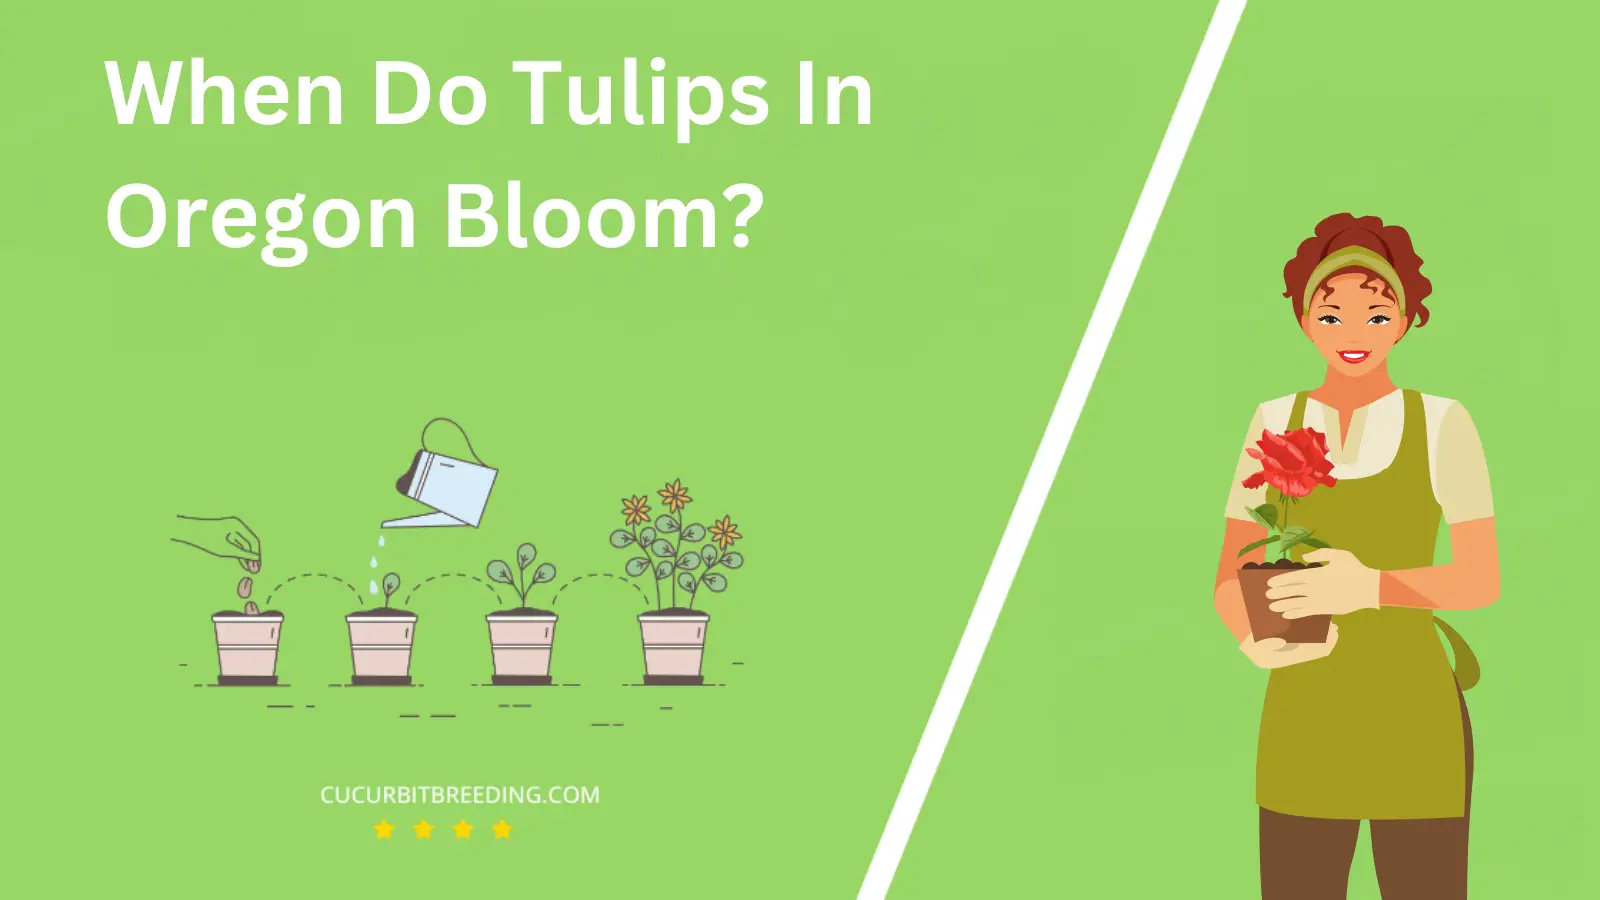 When Do Tulips In Oregon Bloom?